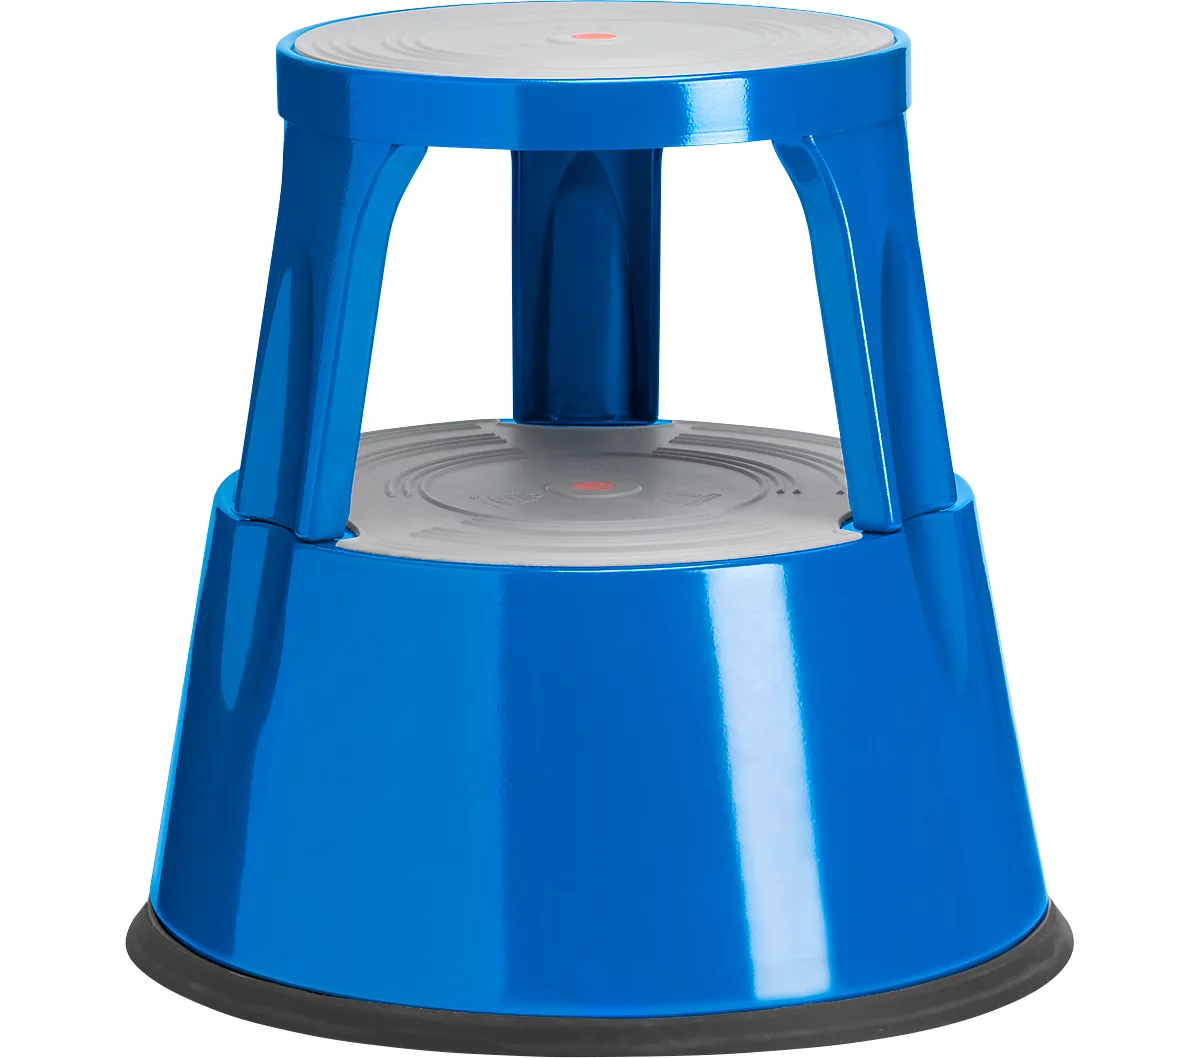 Fahrbarer Rolltritthocker, rutschfester Gummibelag, H 410 x ø 433/283 mm, bis 150 kg, blau